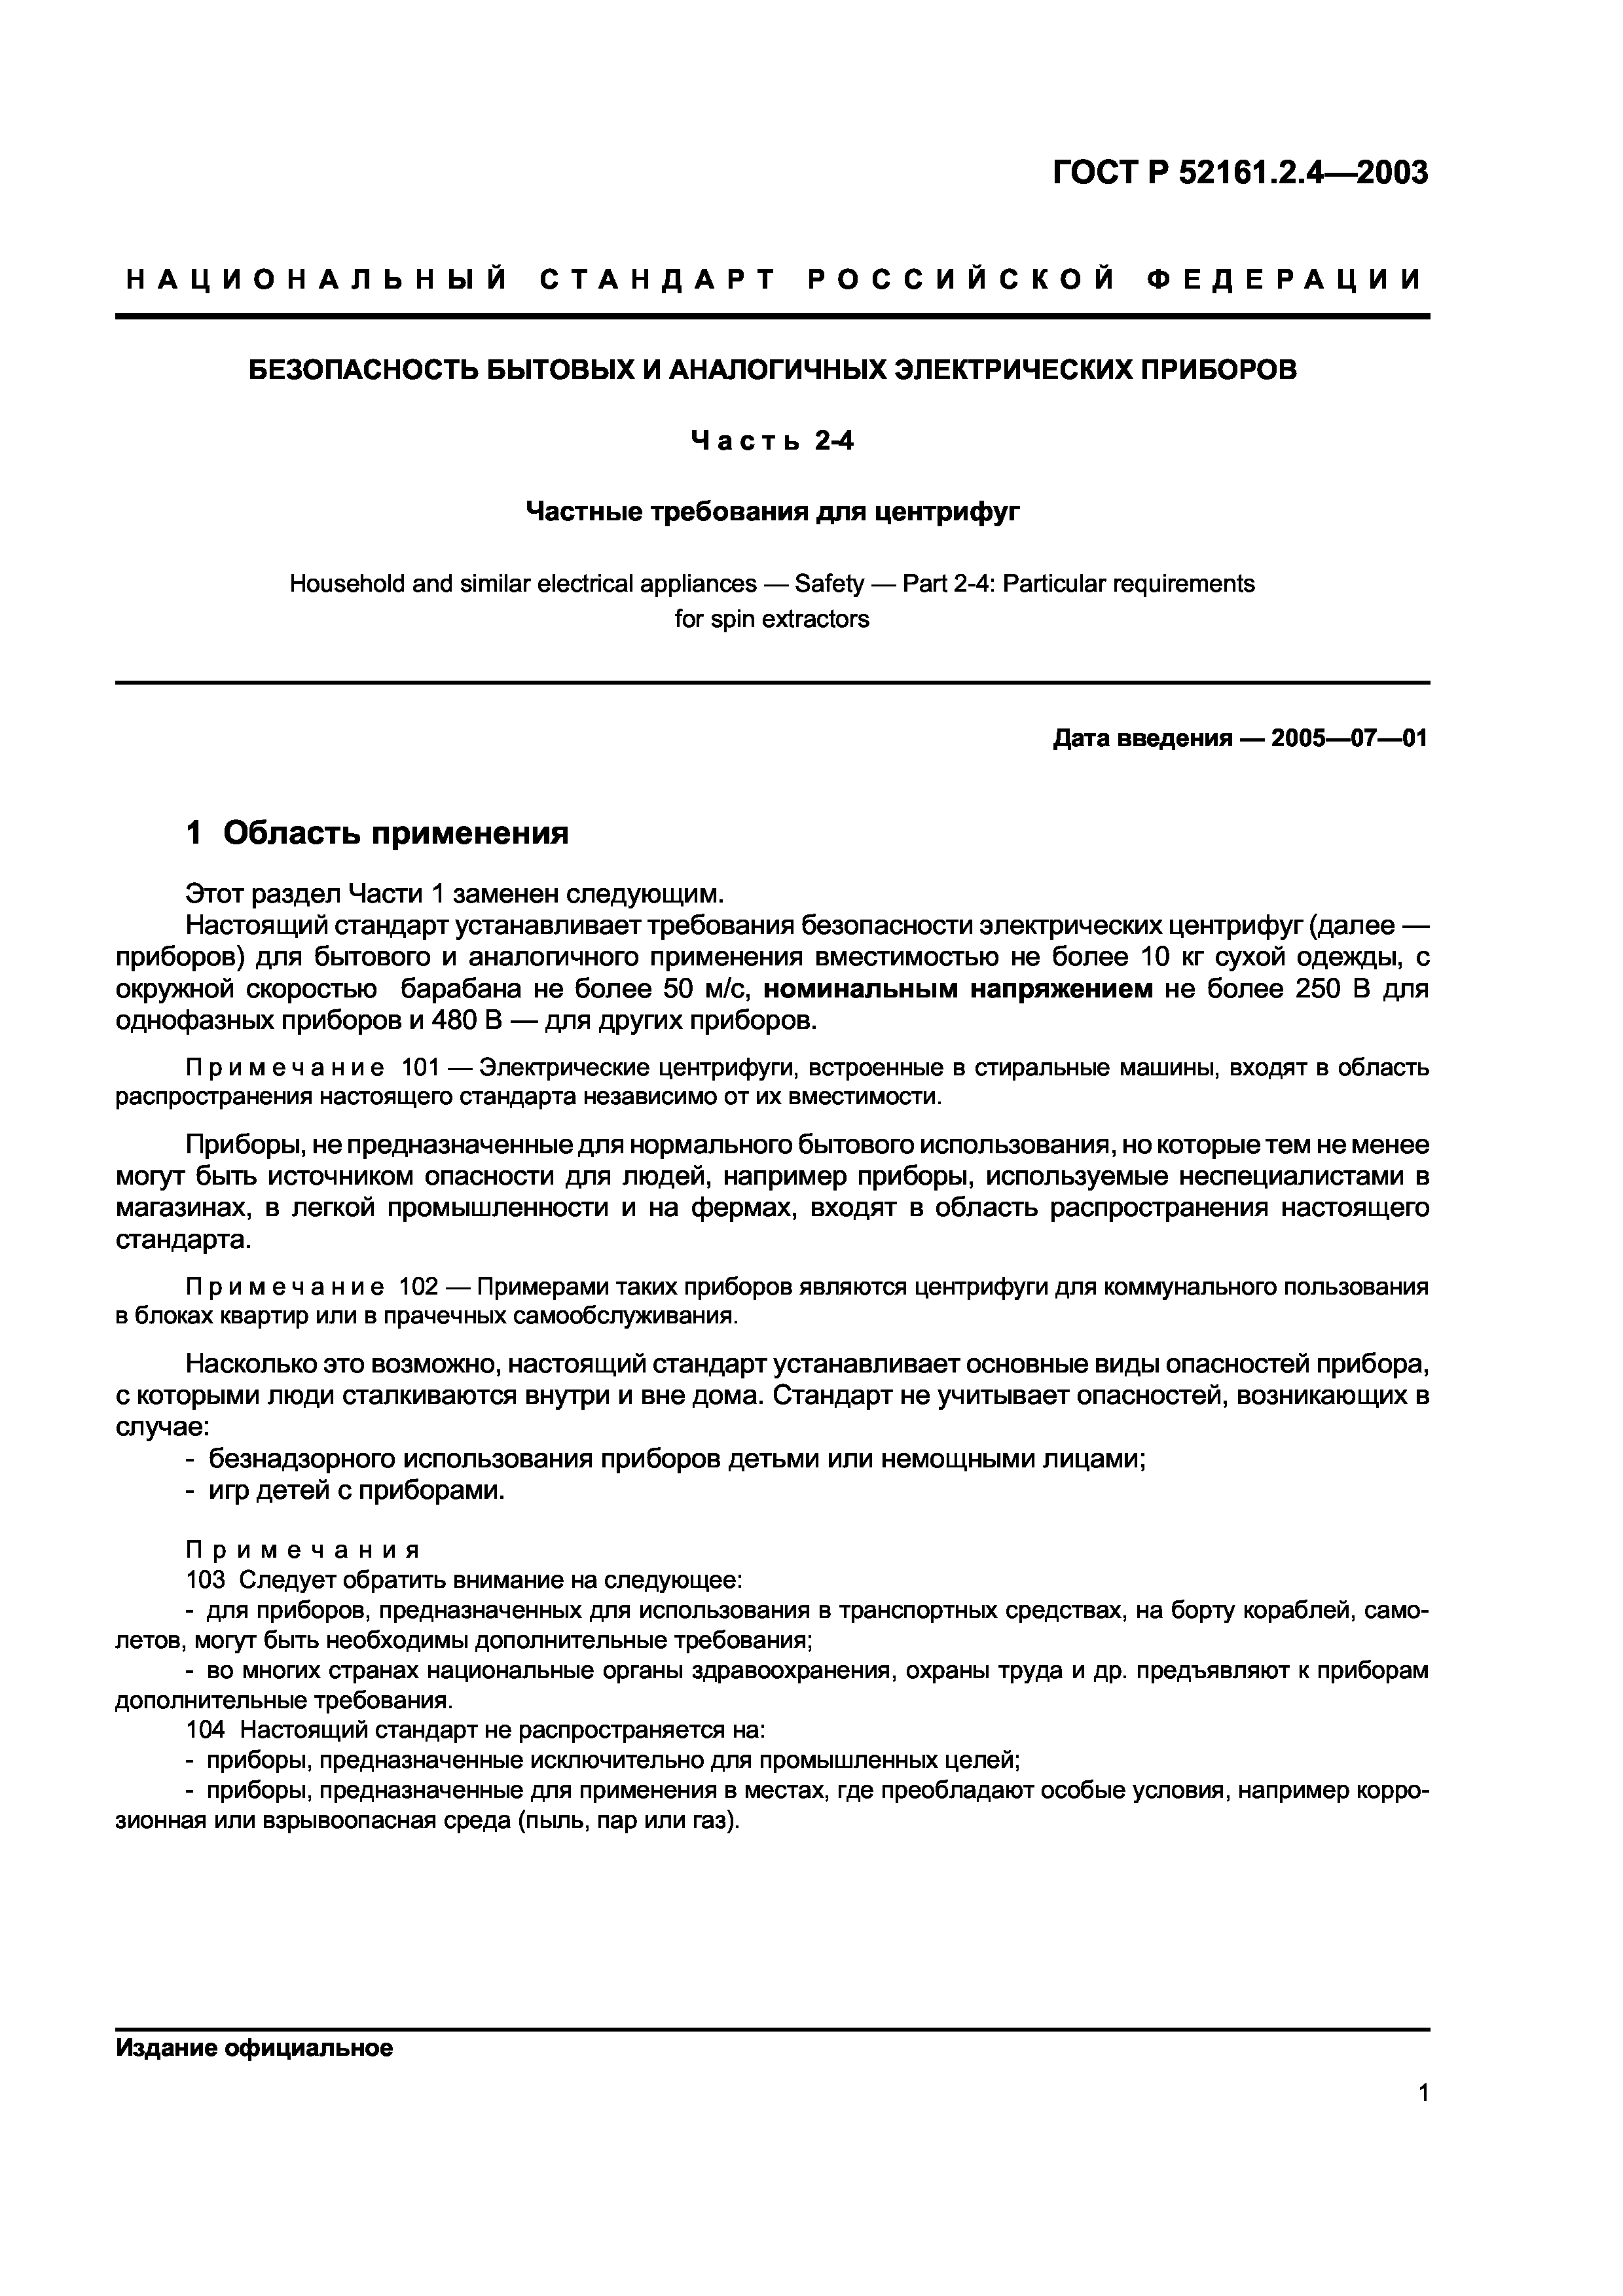 ГОСТ Р 52161.2.4-2003